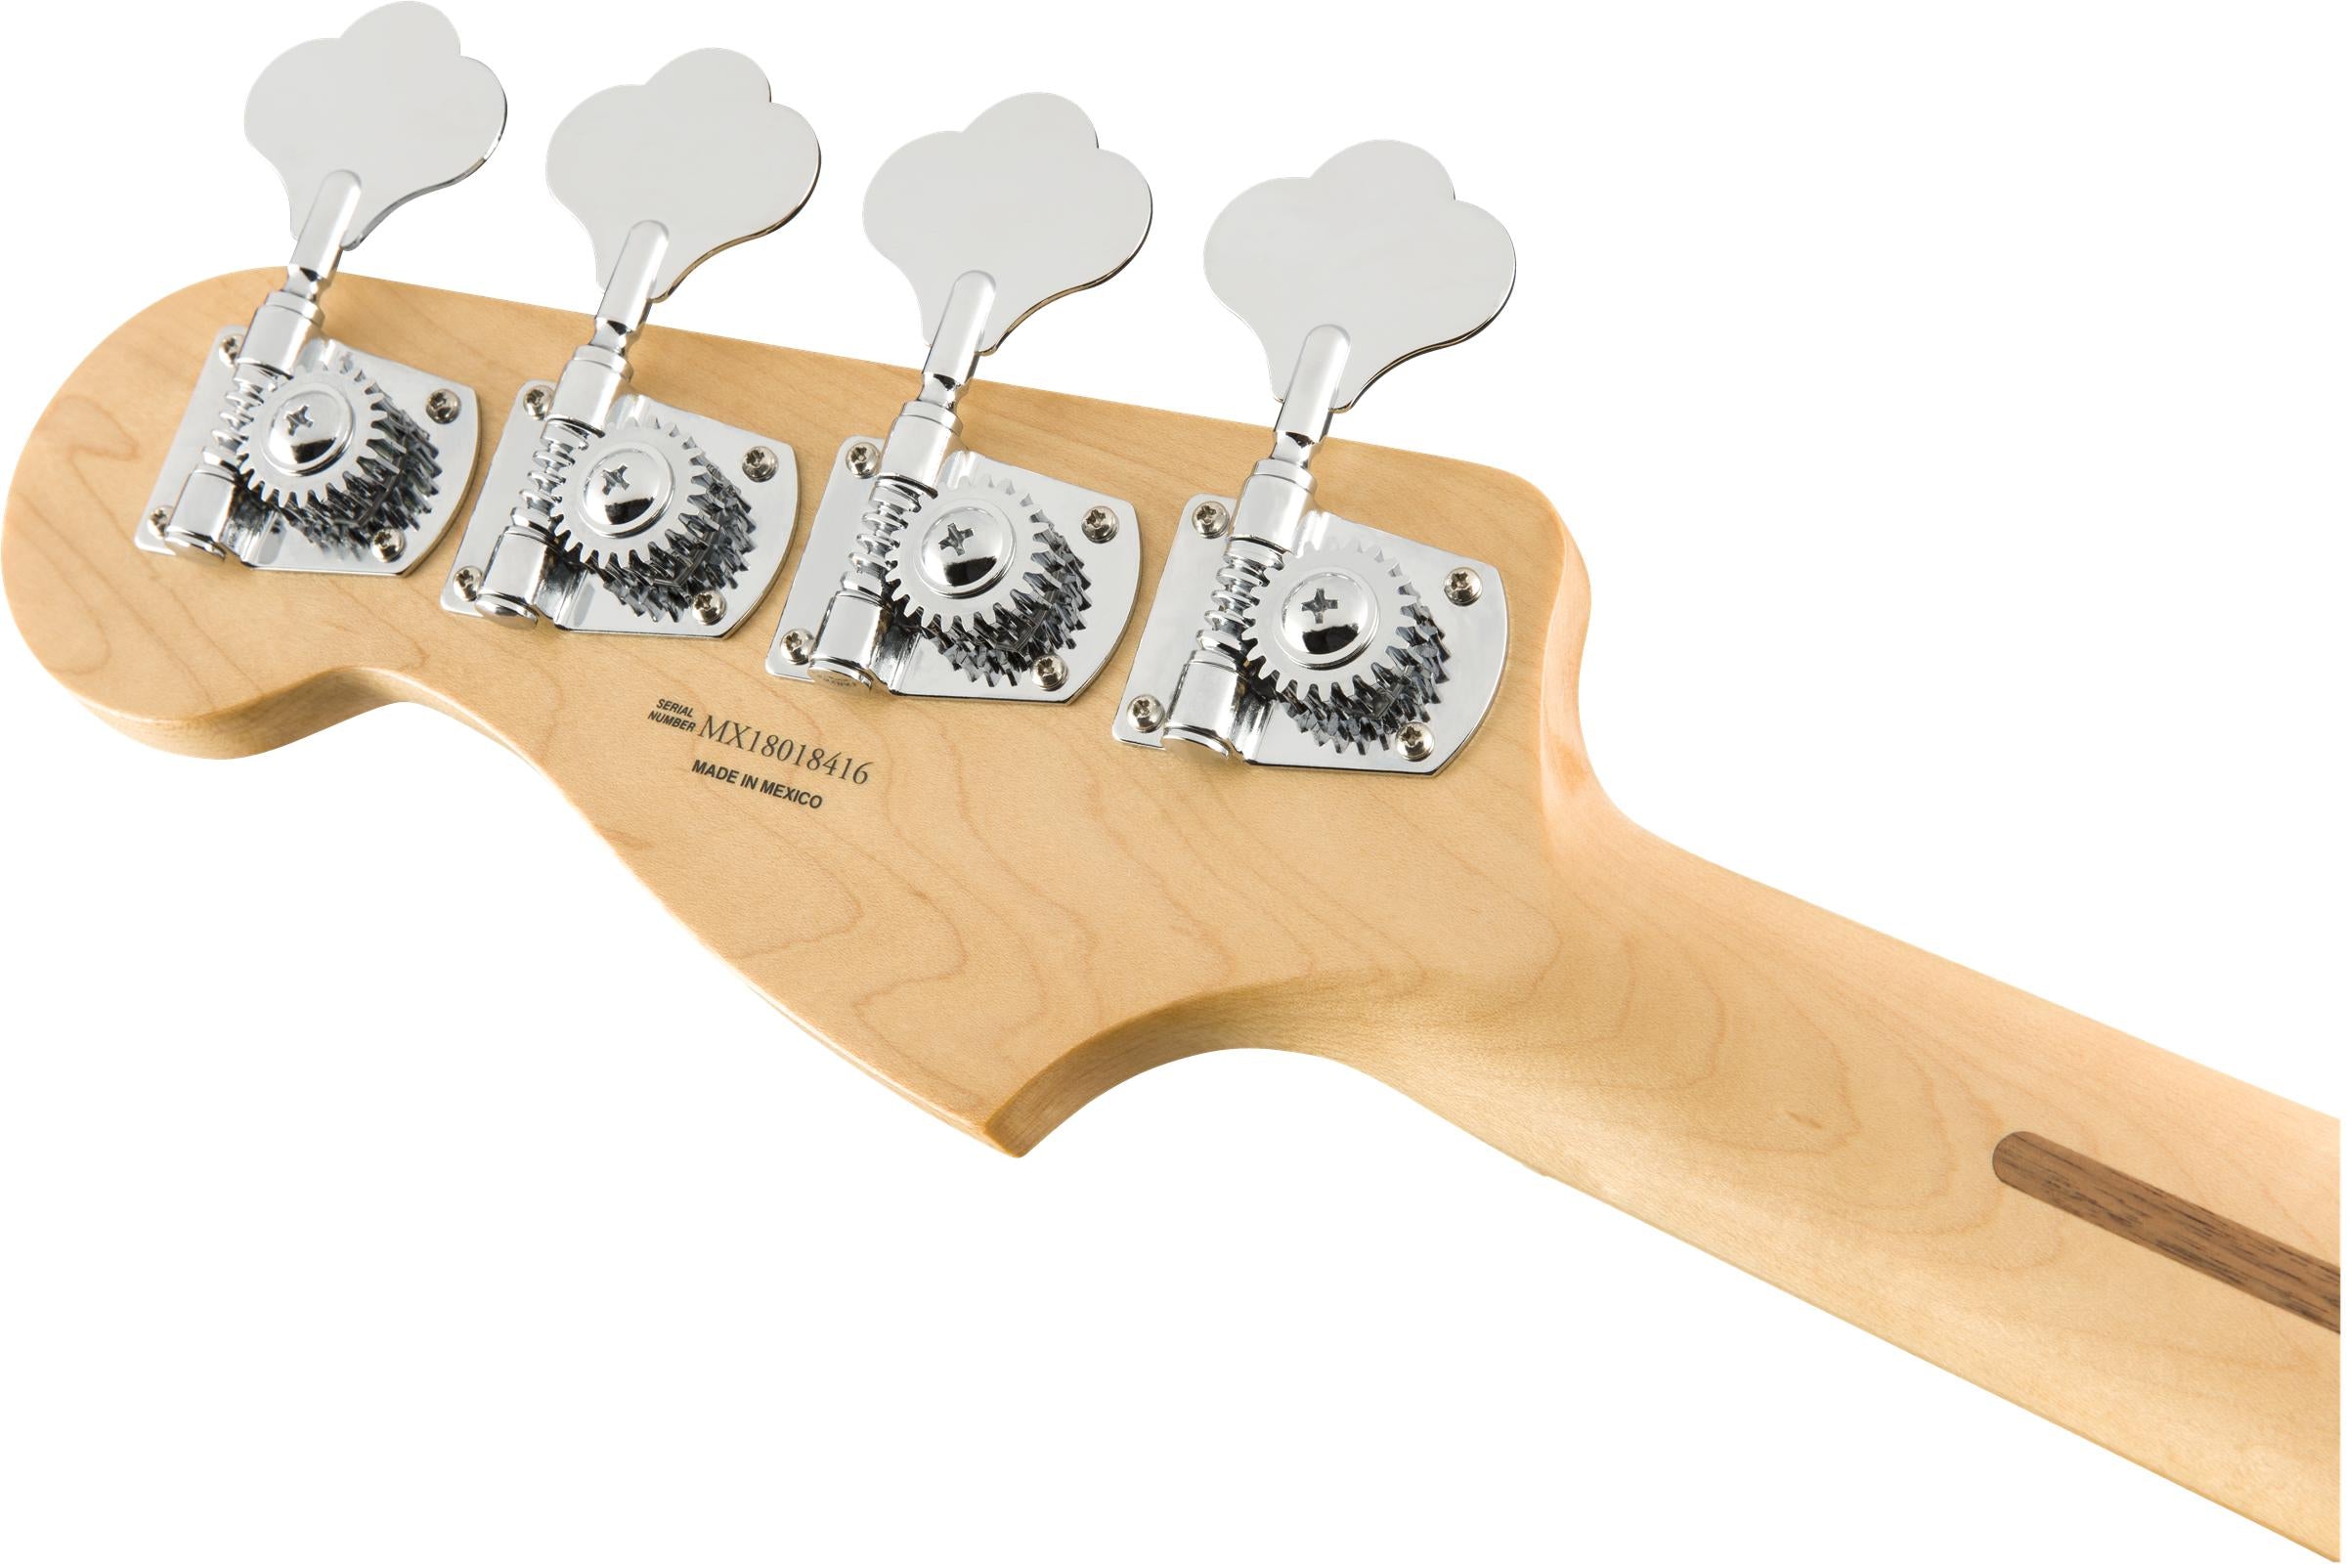 Fender Player Precision Bass, Black